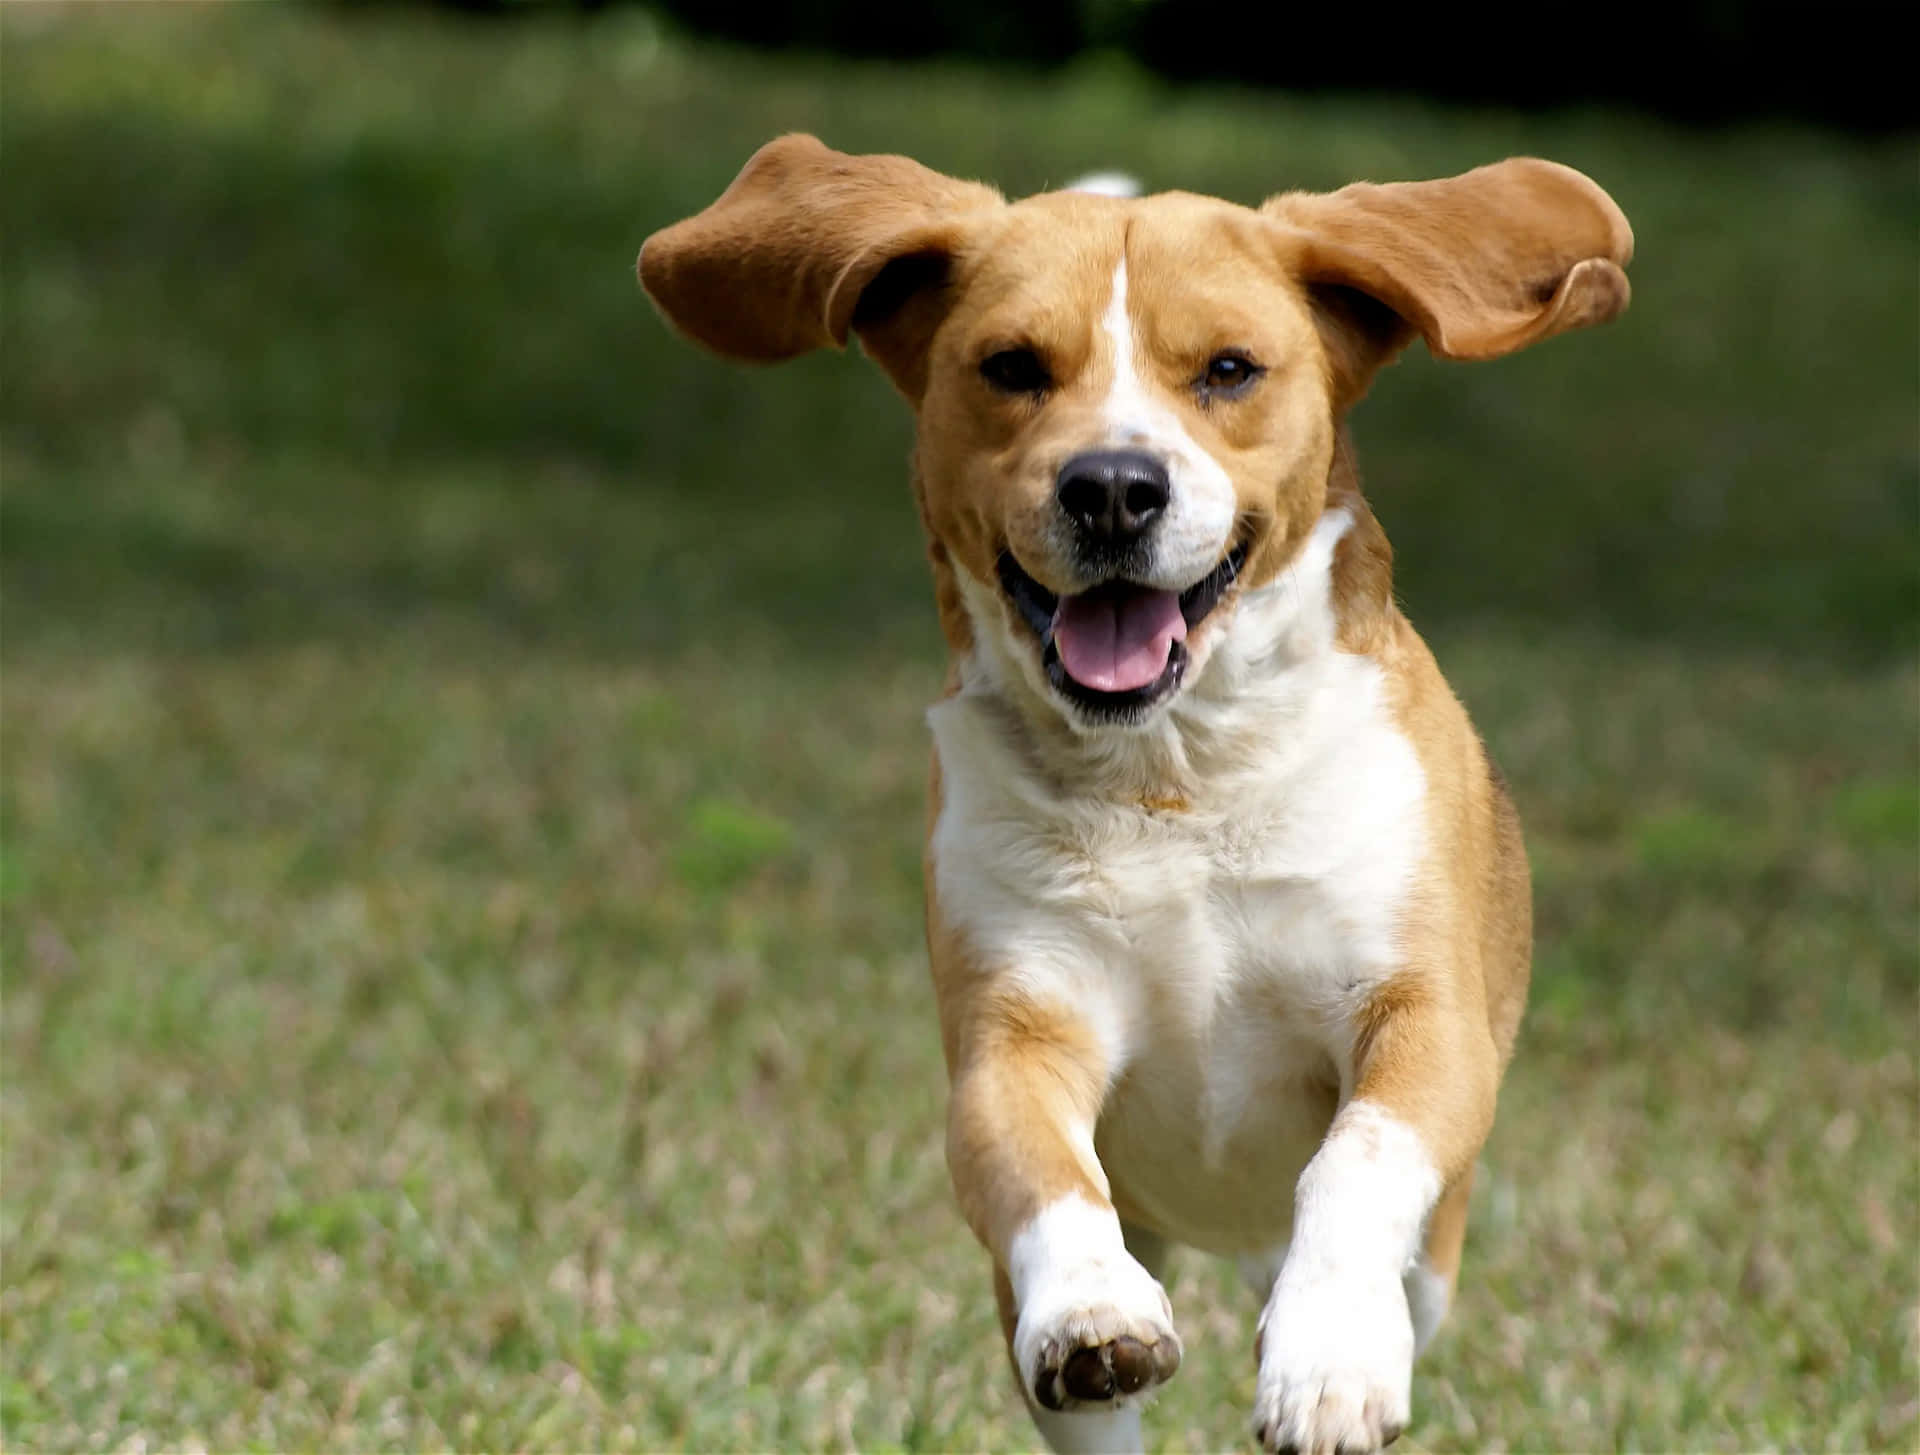 Bildpå Springande Beaglehund